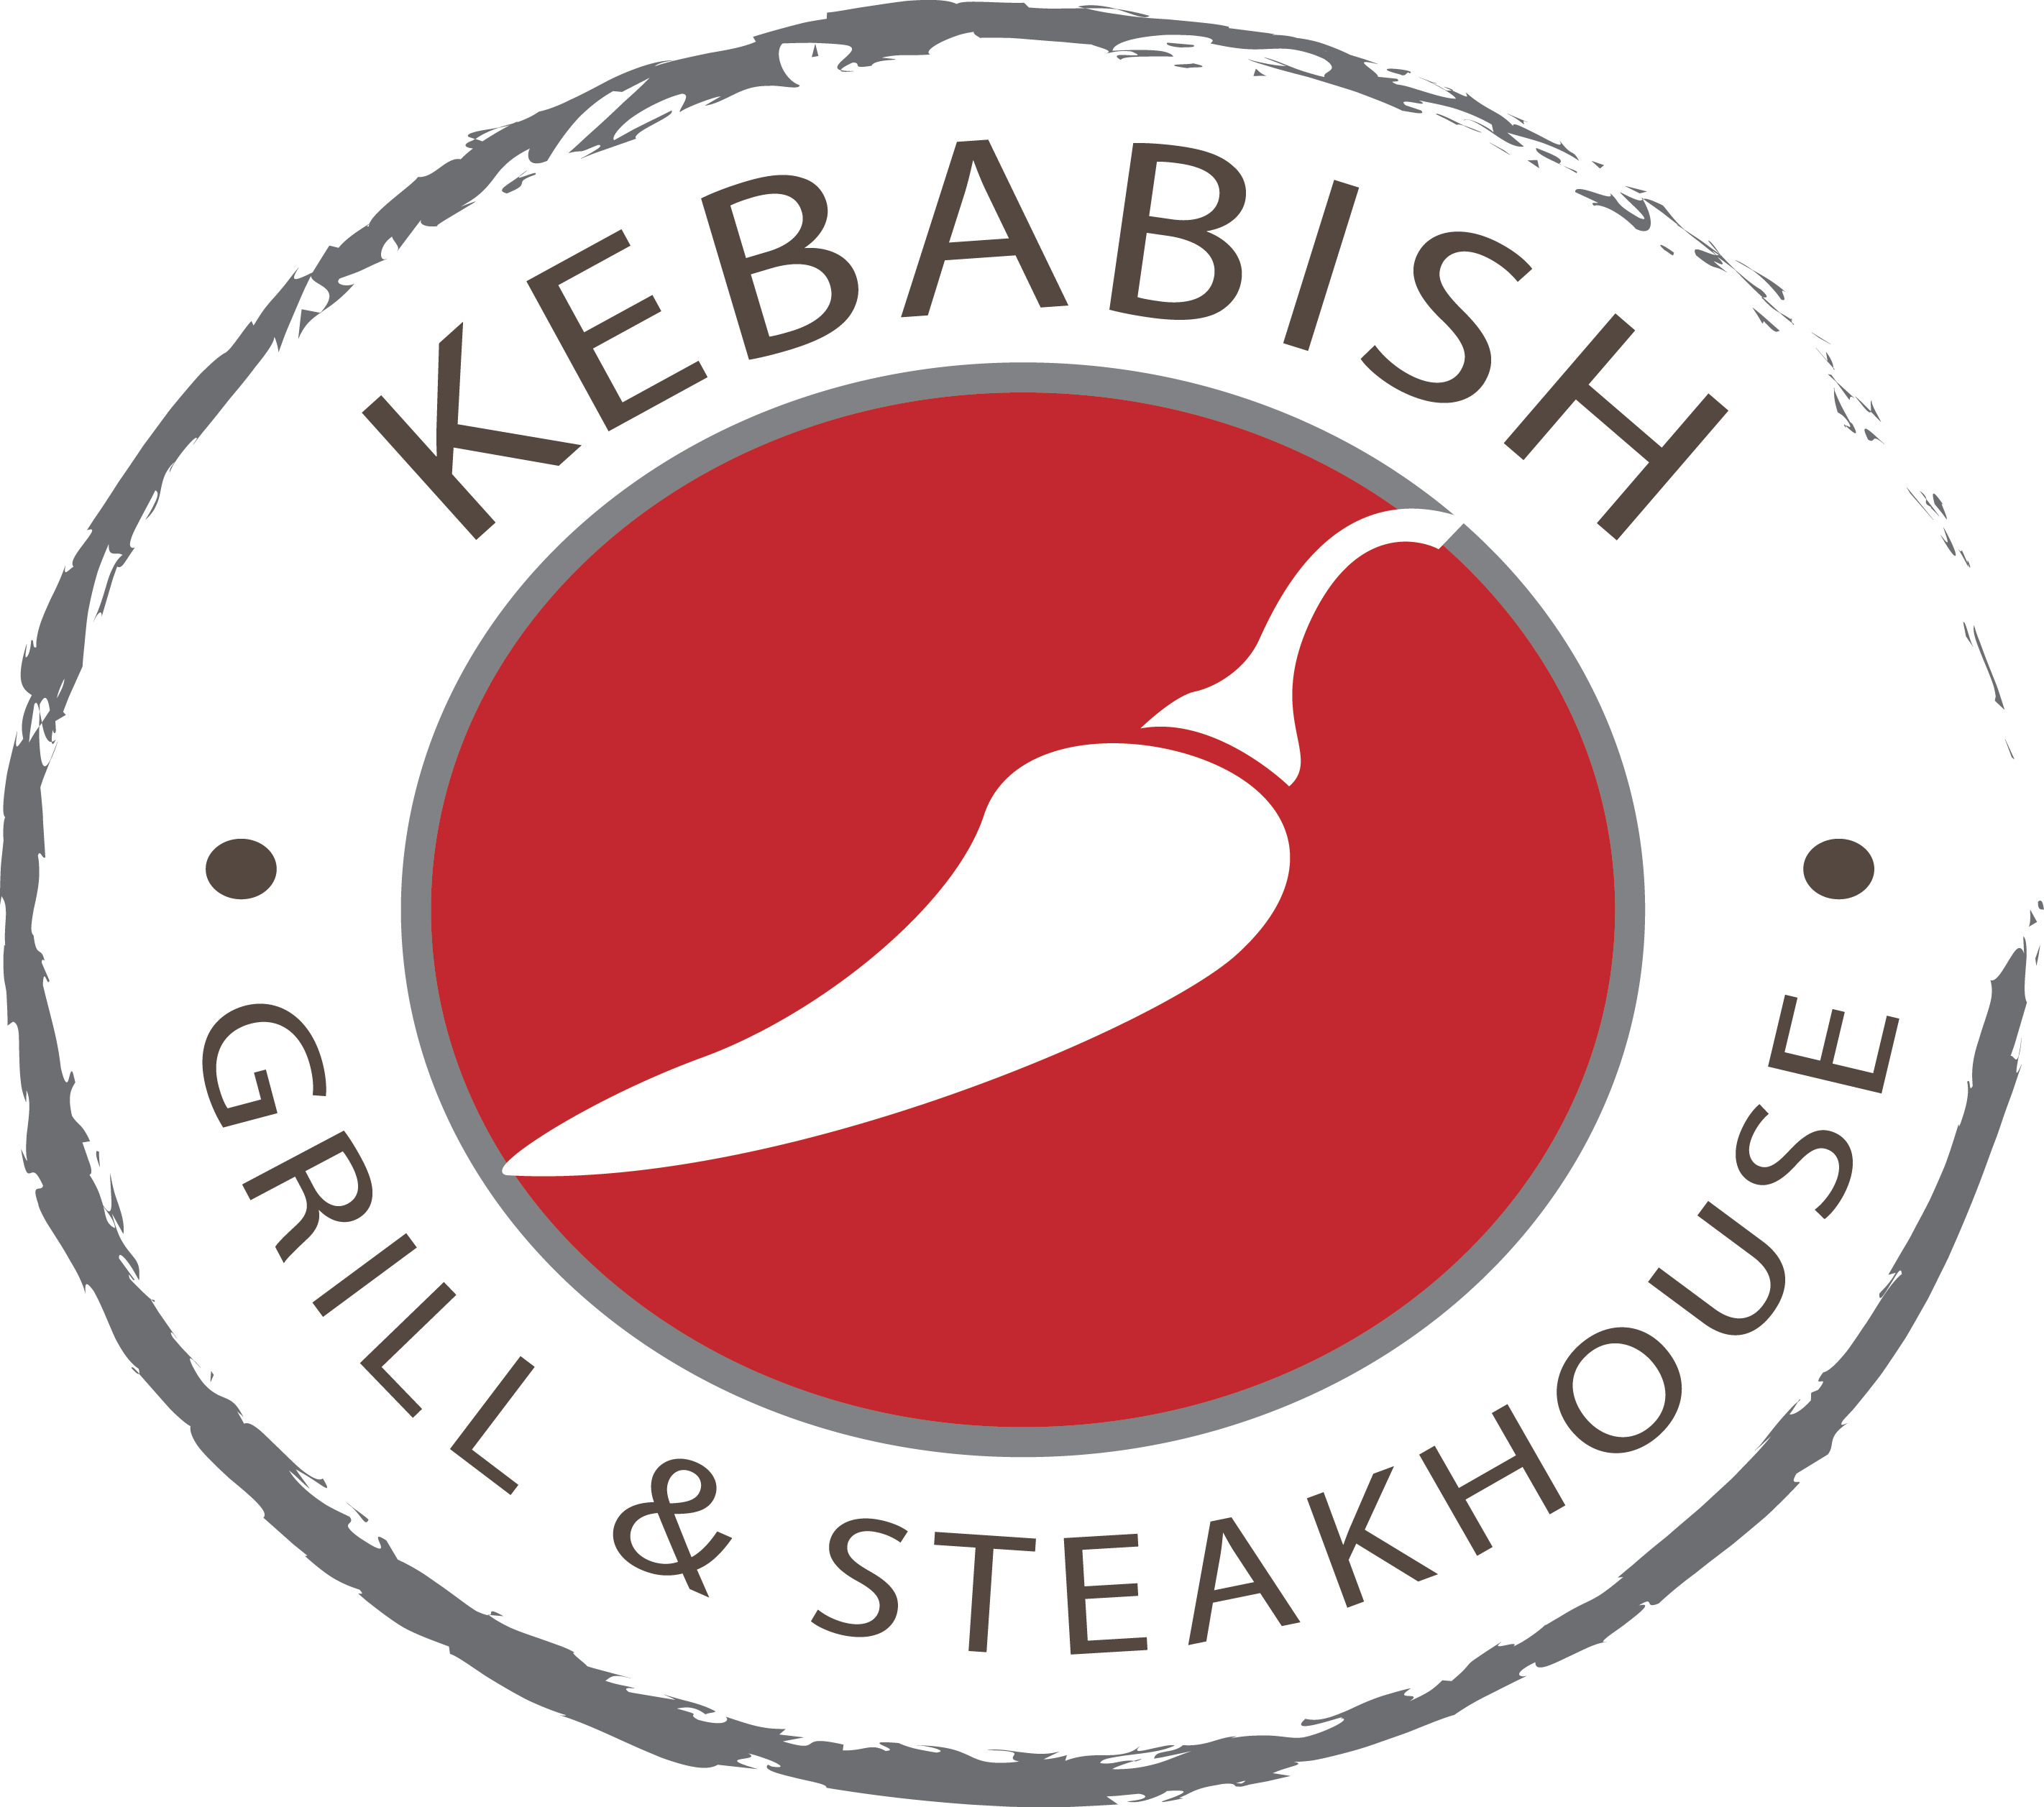 Kebabish Grill & Steakhouse Logo png